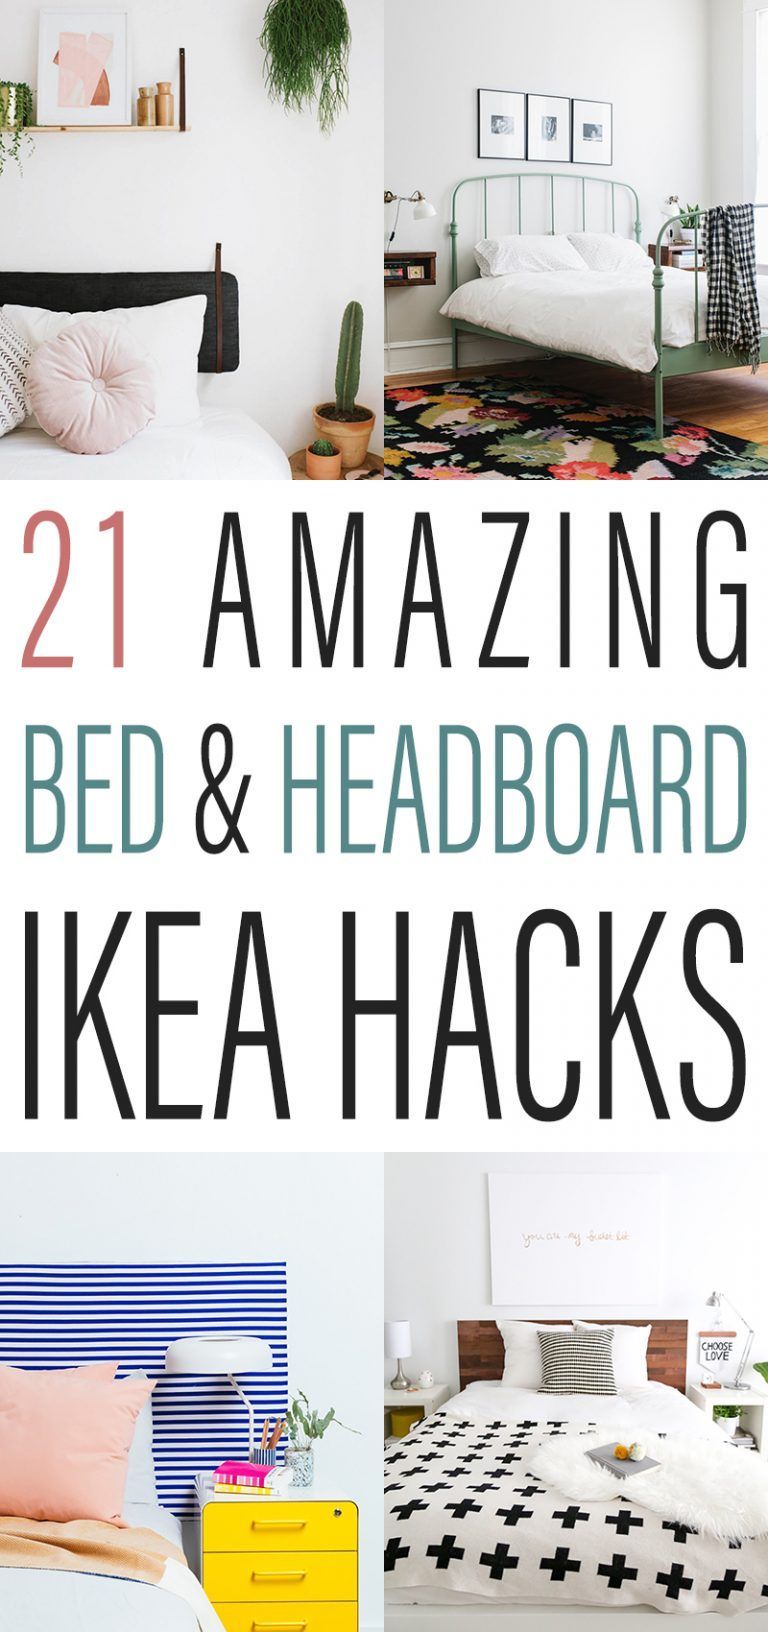 21 Amazing Bed and Headboard IKEA Hacks - The Cottage Market - 21 Amazing Bed and Headboard IKEA Hacks - The Cottage Market -   19 diy Headboard ikea ideas